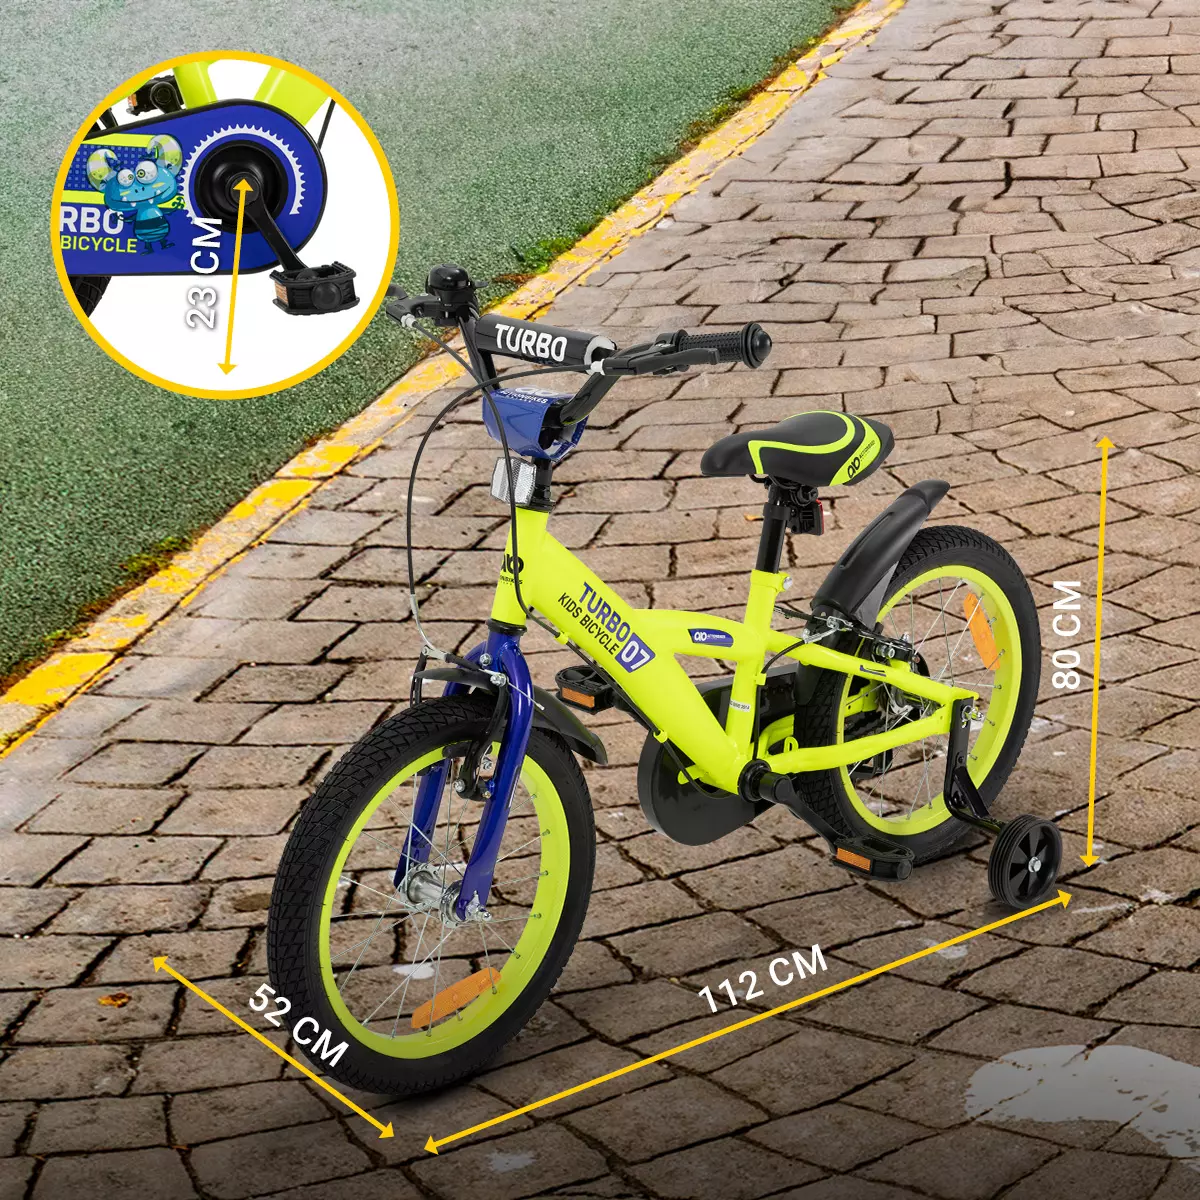 Kinderfahrrad Turbo 16 Zoll ᐅ Actionbikes Fahrrad mit Stützrädern